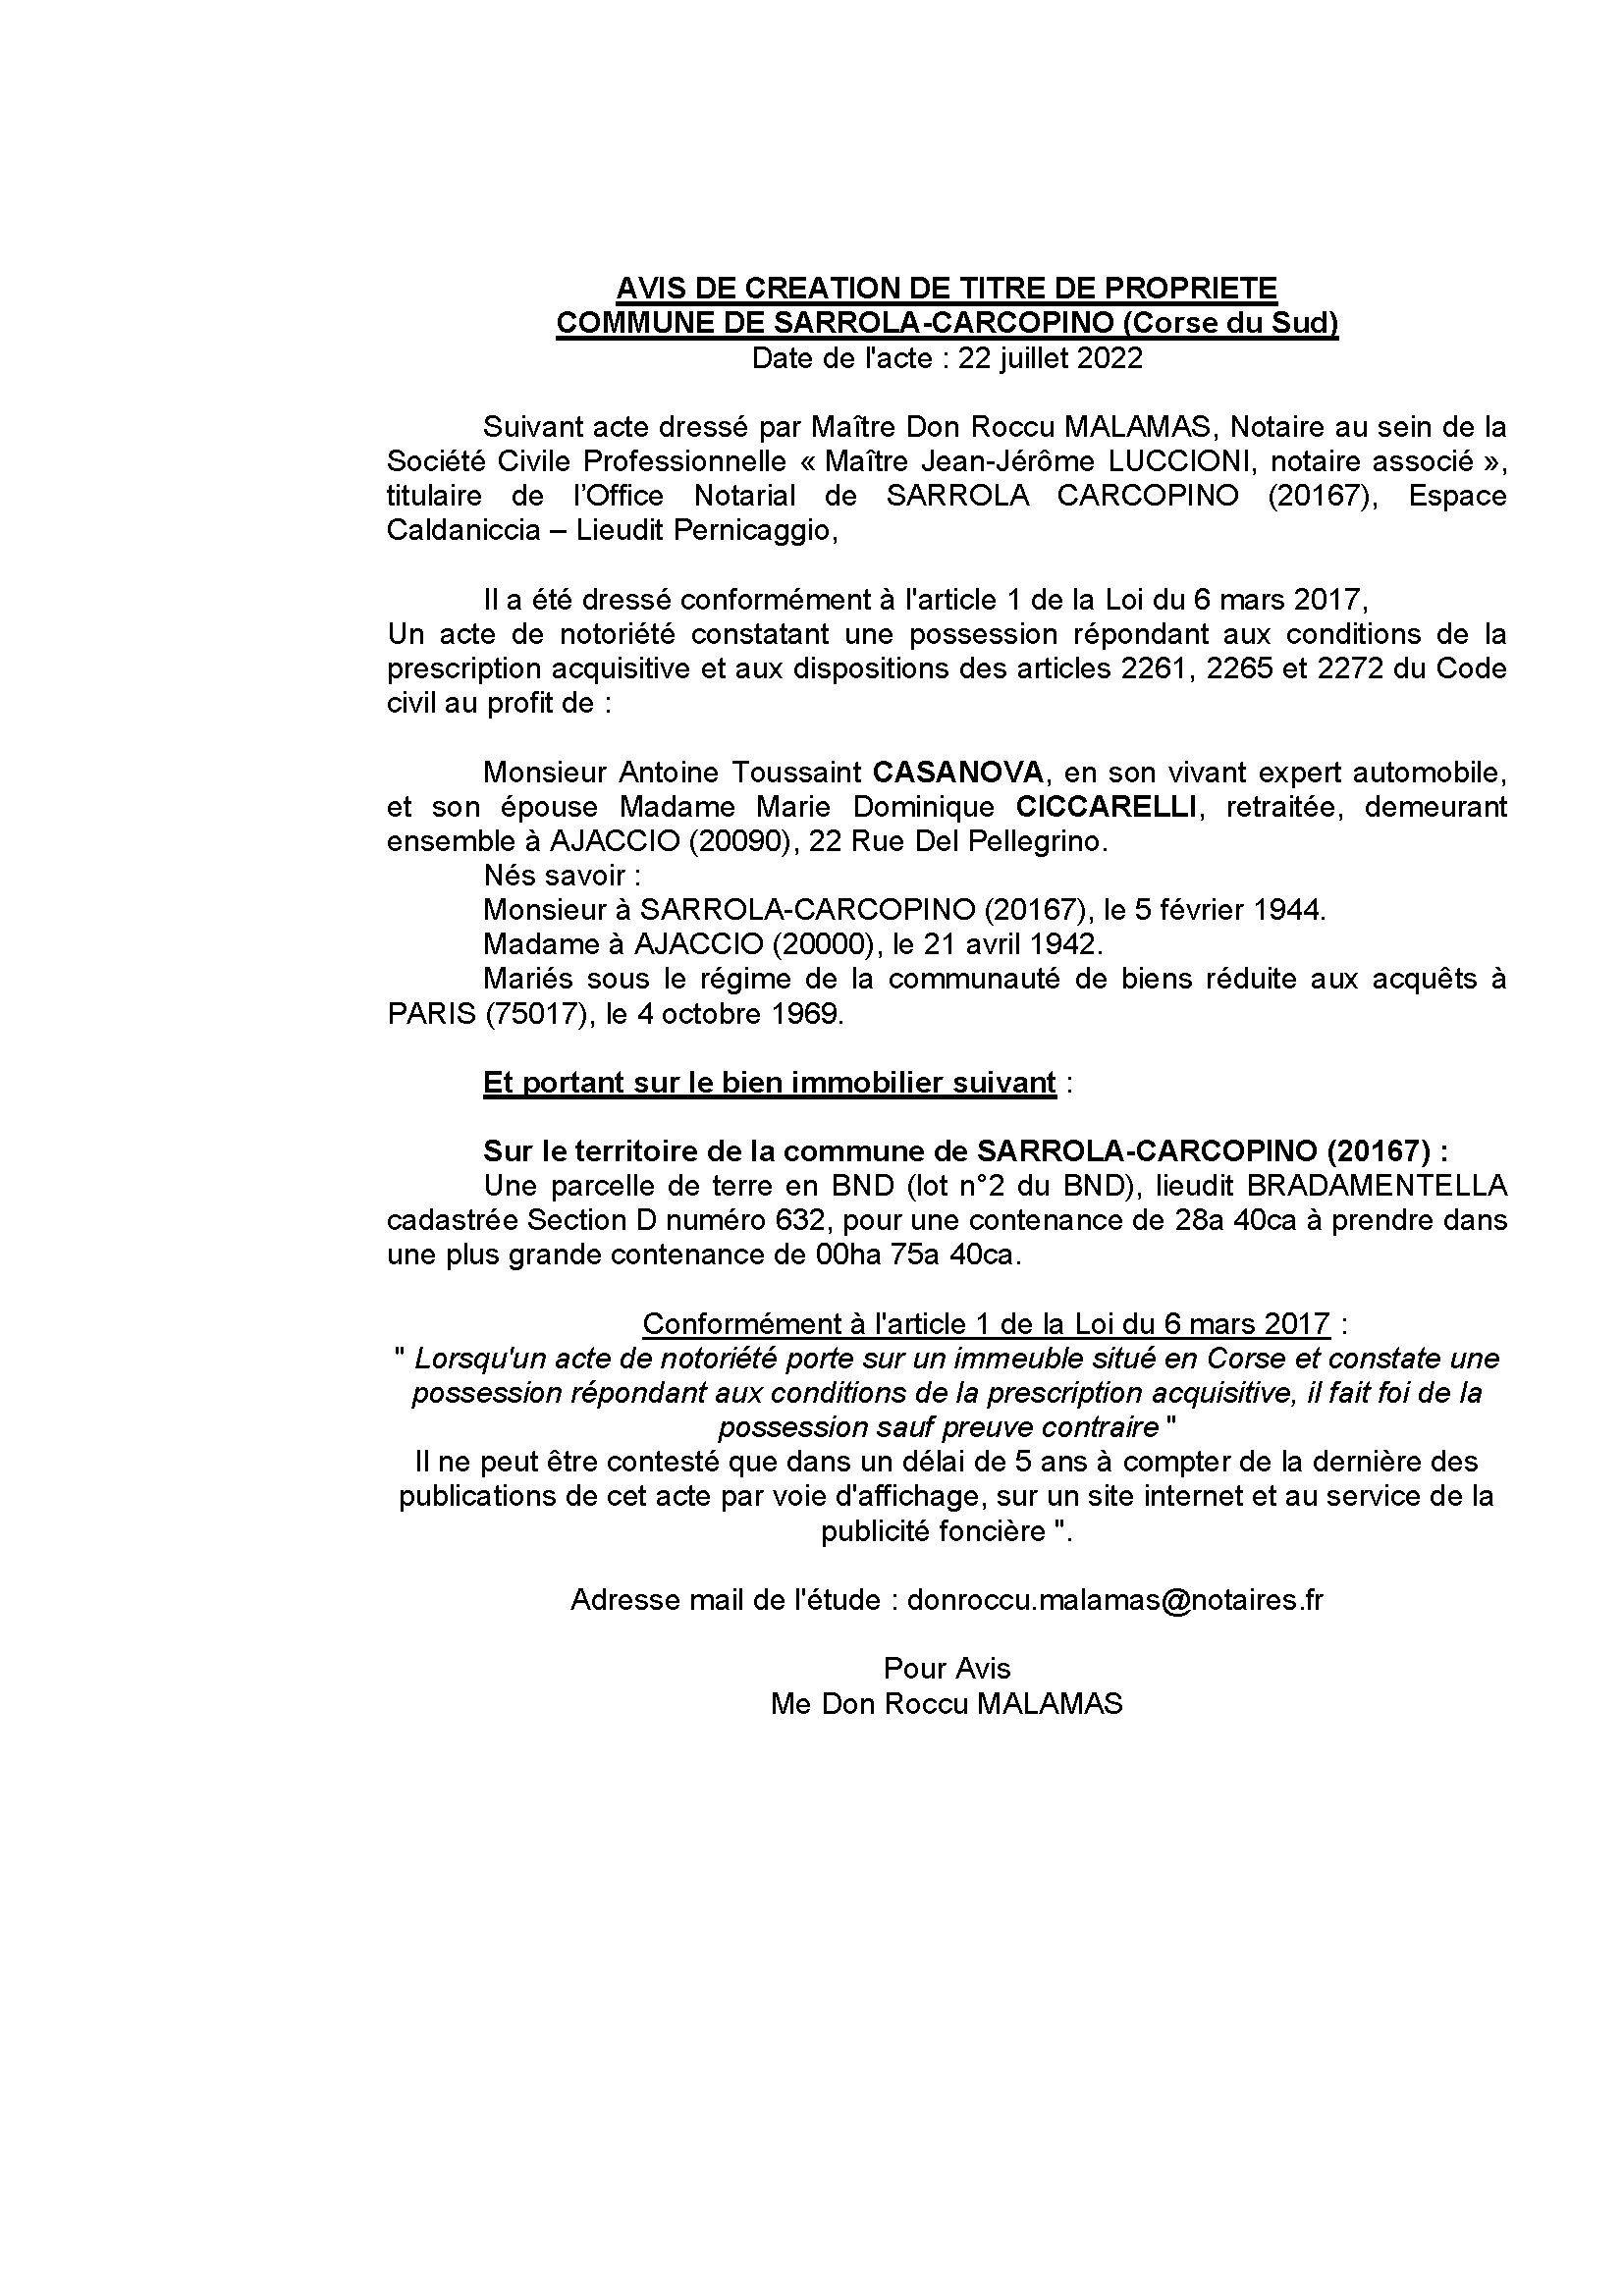 Avis de création de titre de propriété - Commune de Sarrola-Carcopino (Corse-du-Sud)